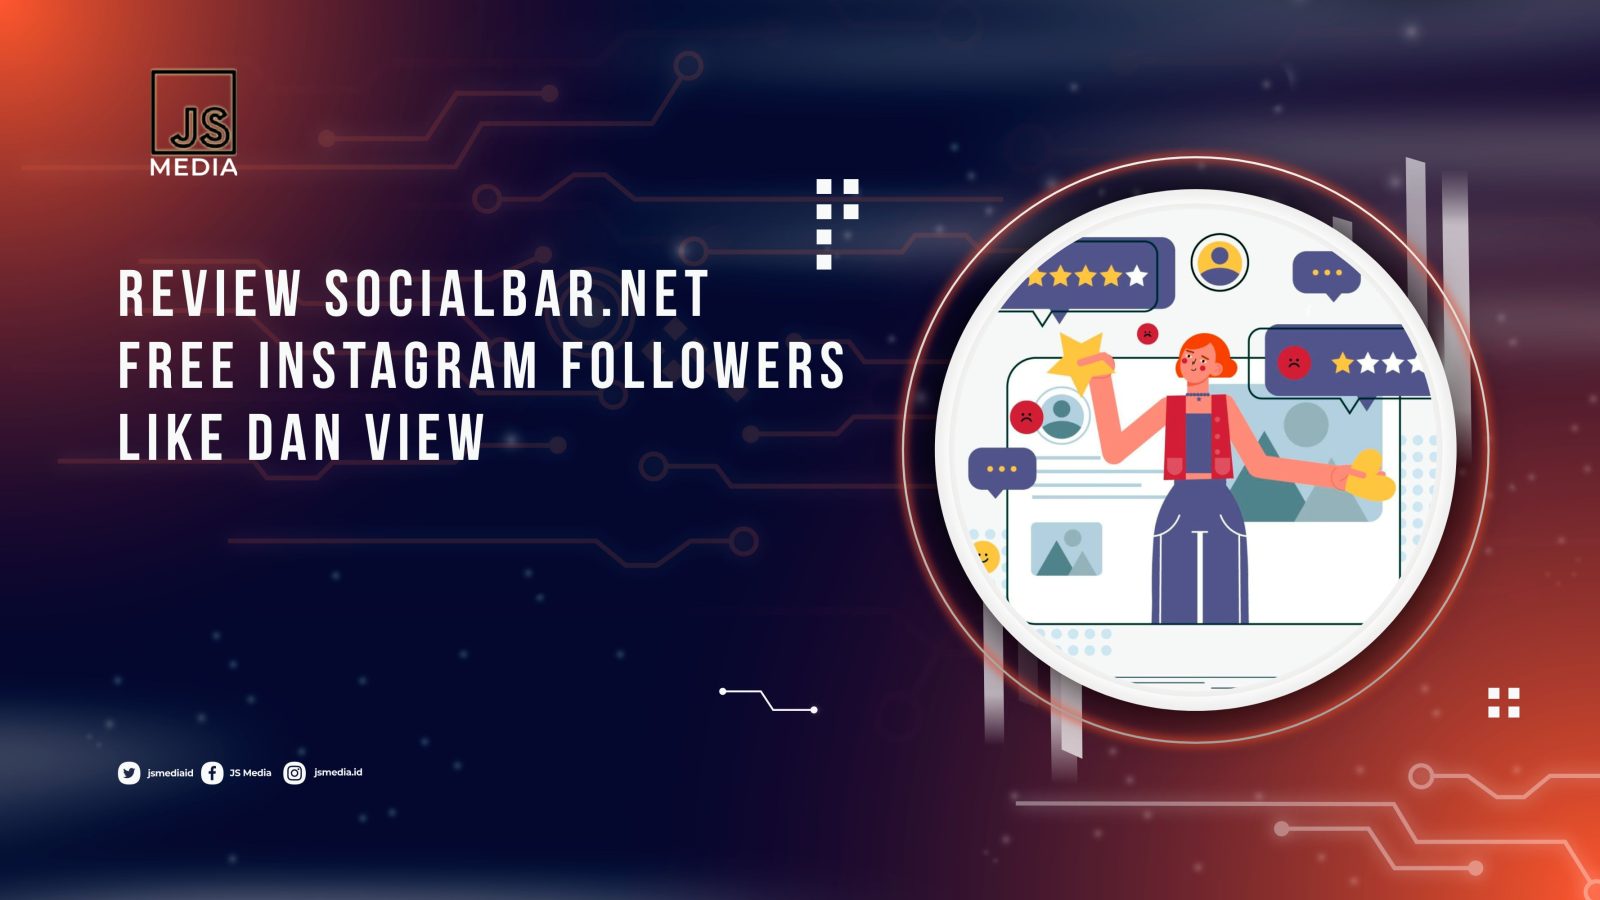 Review Socialbar.net Free Instagram Followers, Like Dan View